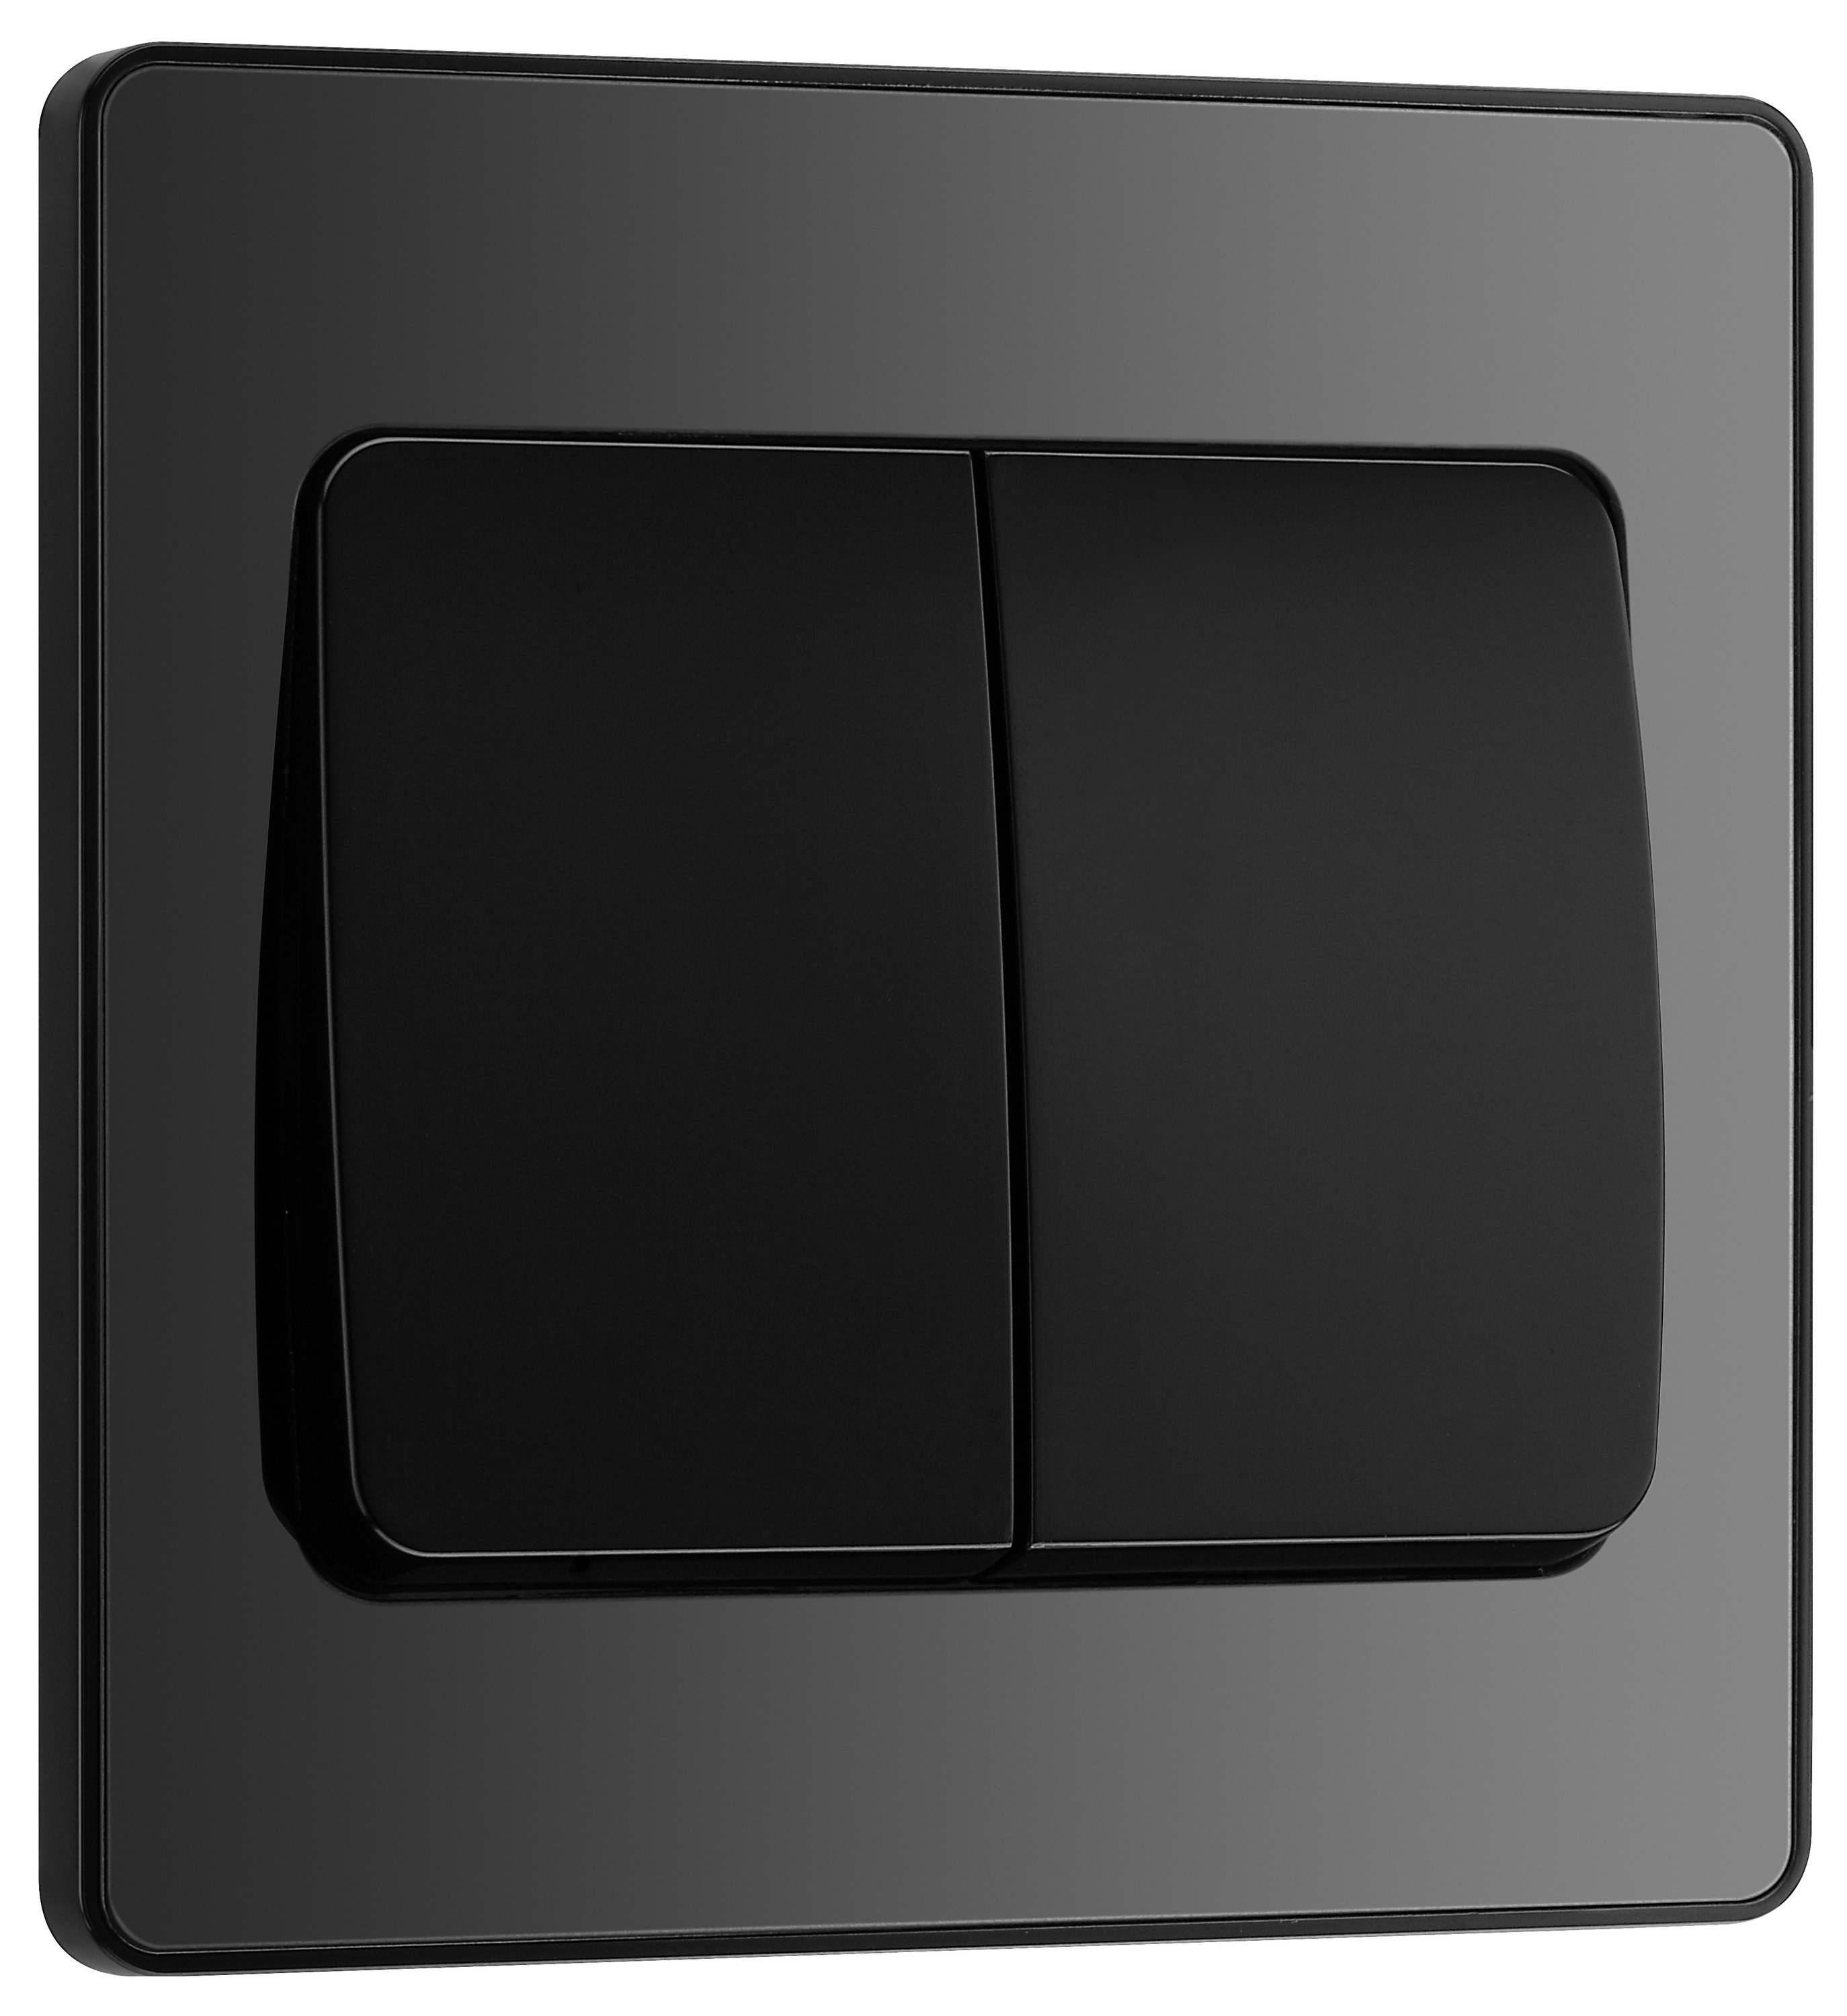 BG Evolve Black Chrome 20A 16Ax Wide Rocker Double Light Switch - 2 Way